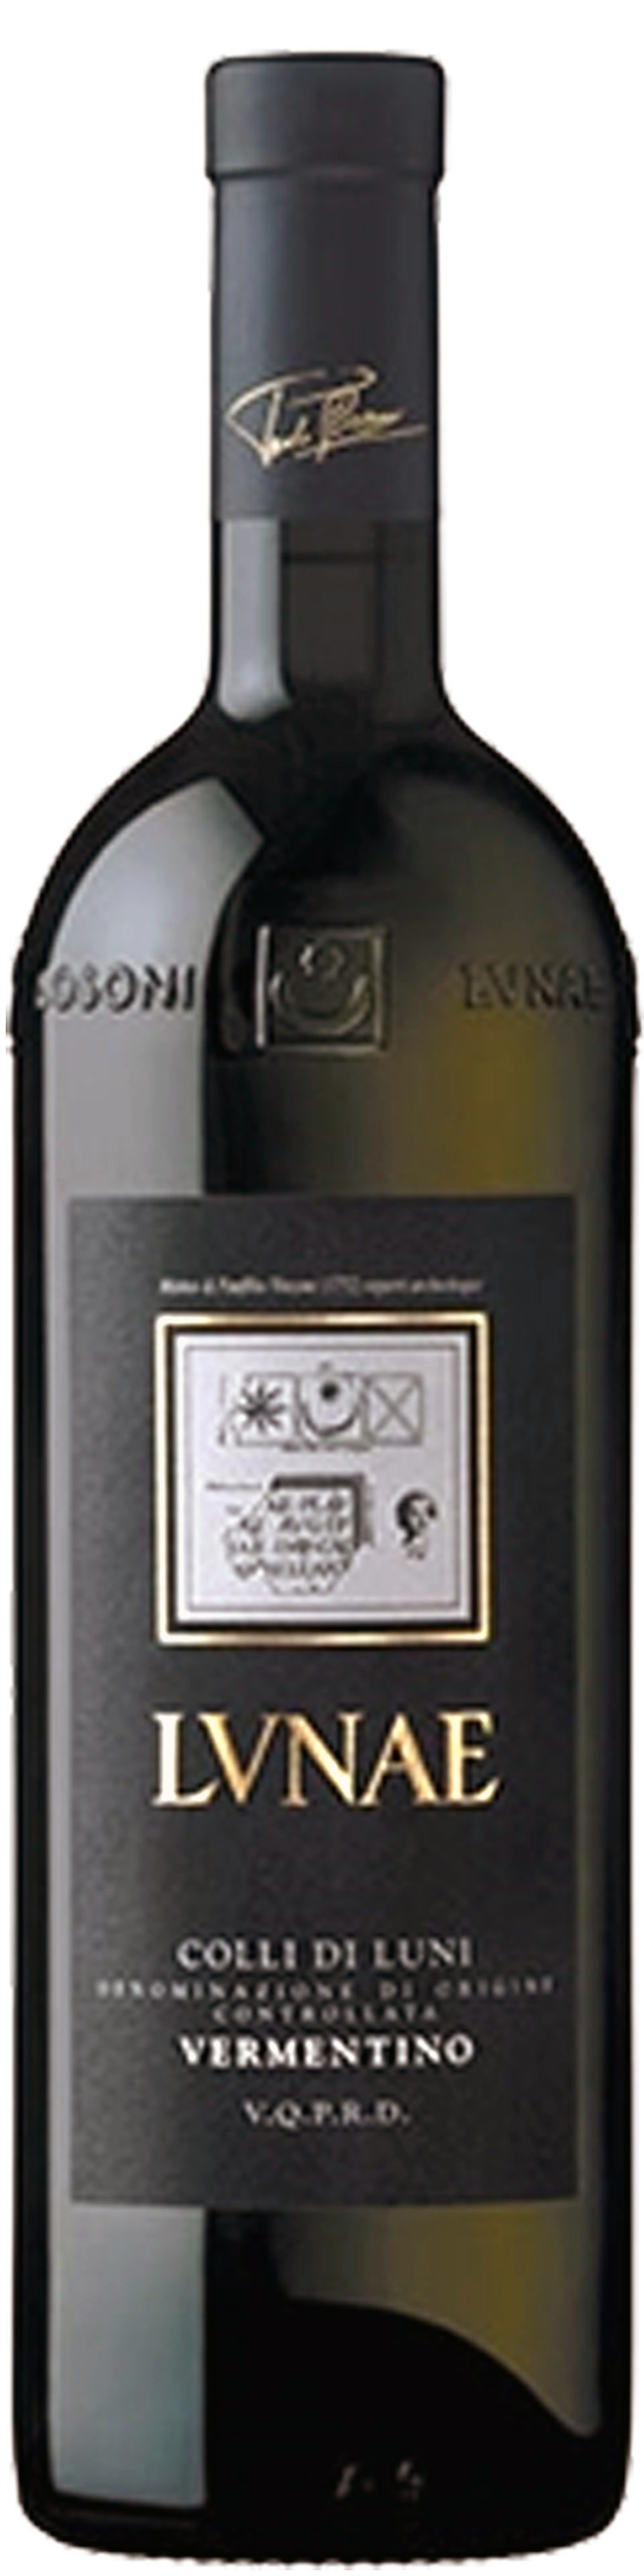 Bottle shot of 2013 Vermentino Colli di Luni Etichetta Nera